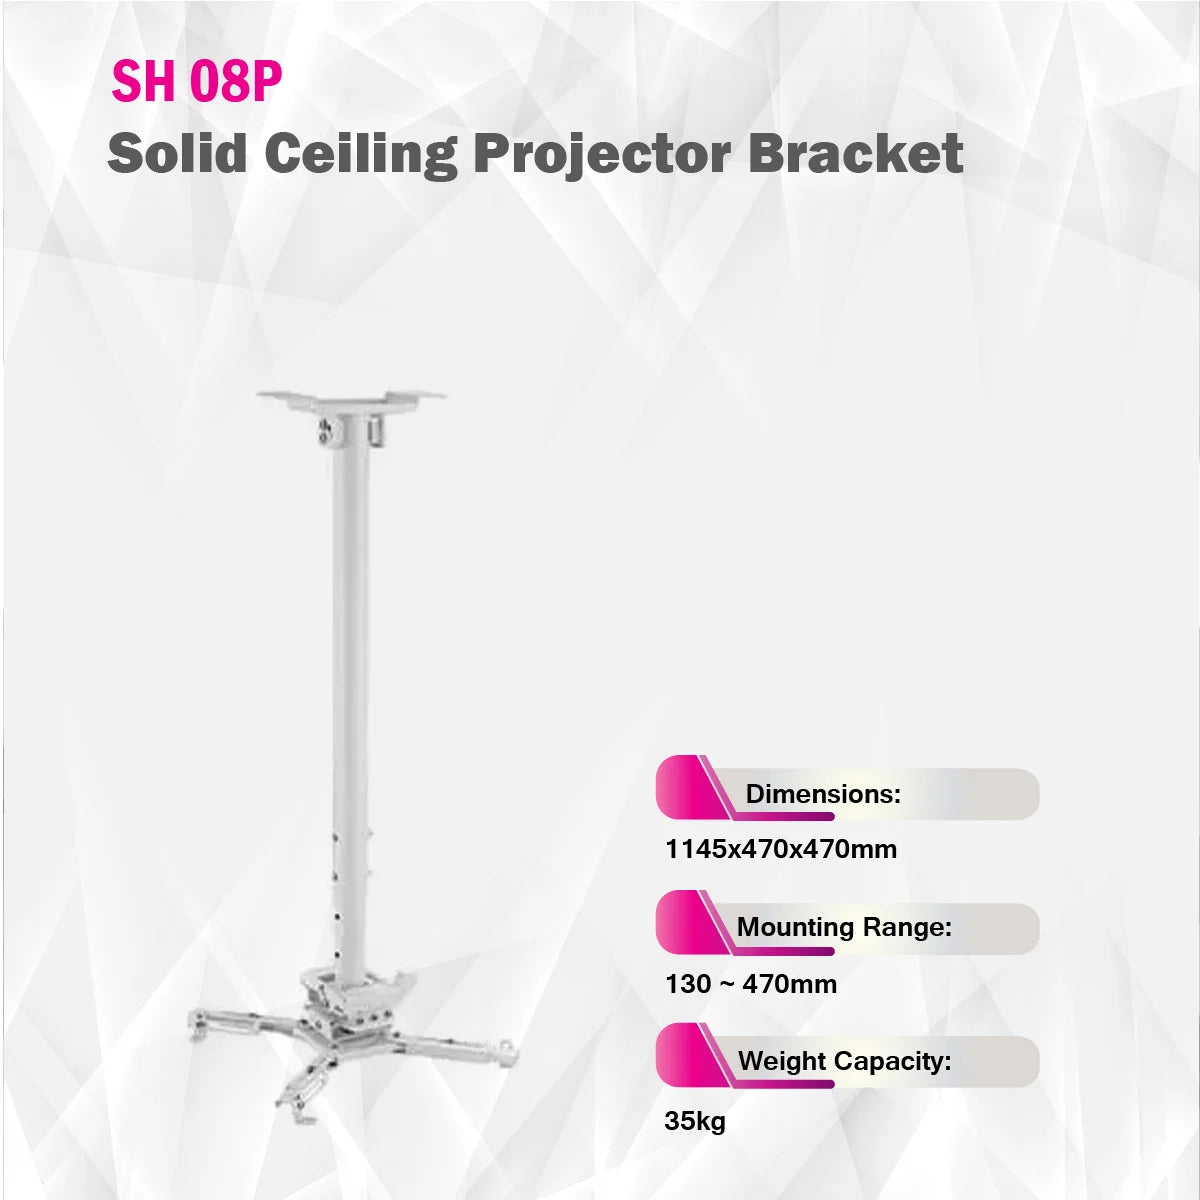 SkillTech - SH 08P - Solid Ceiling Projector Bracket